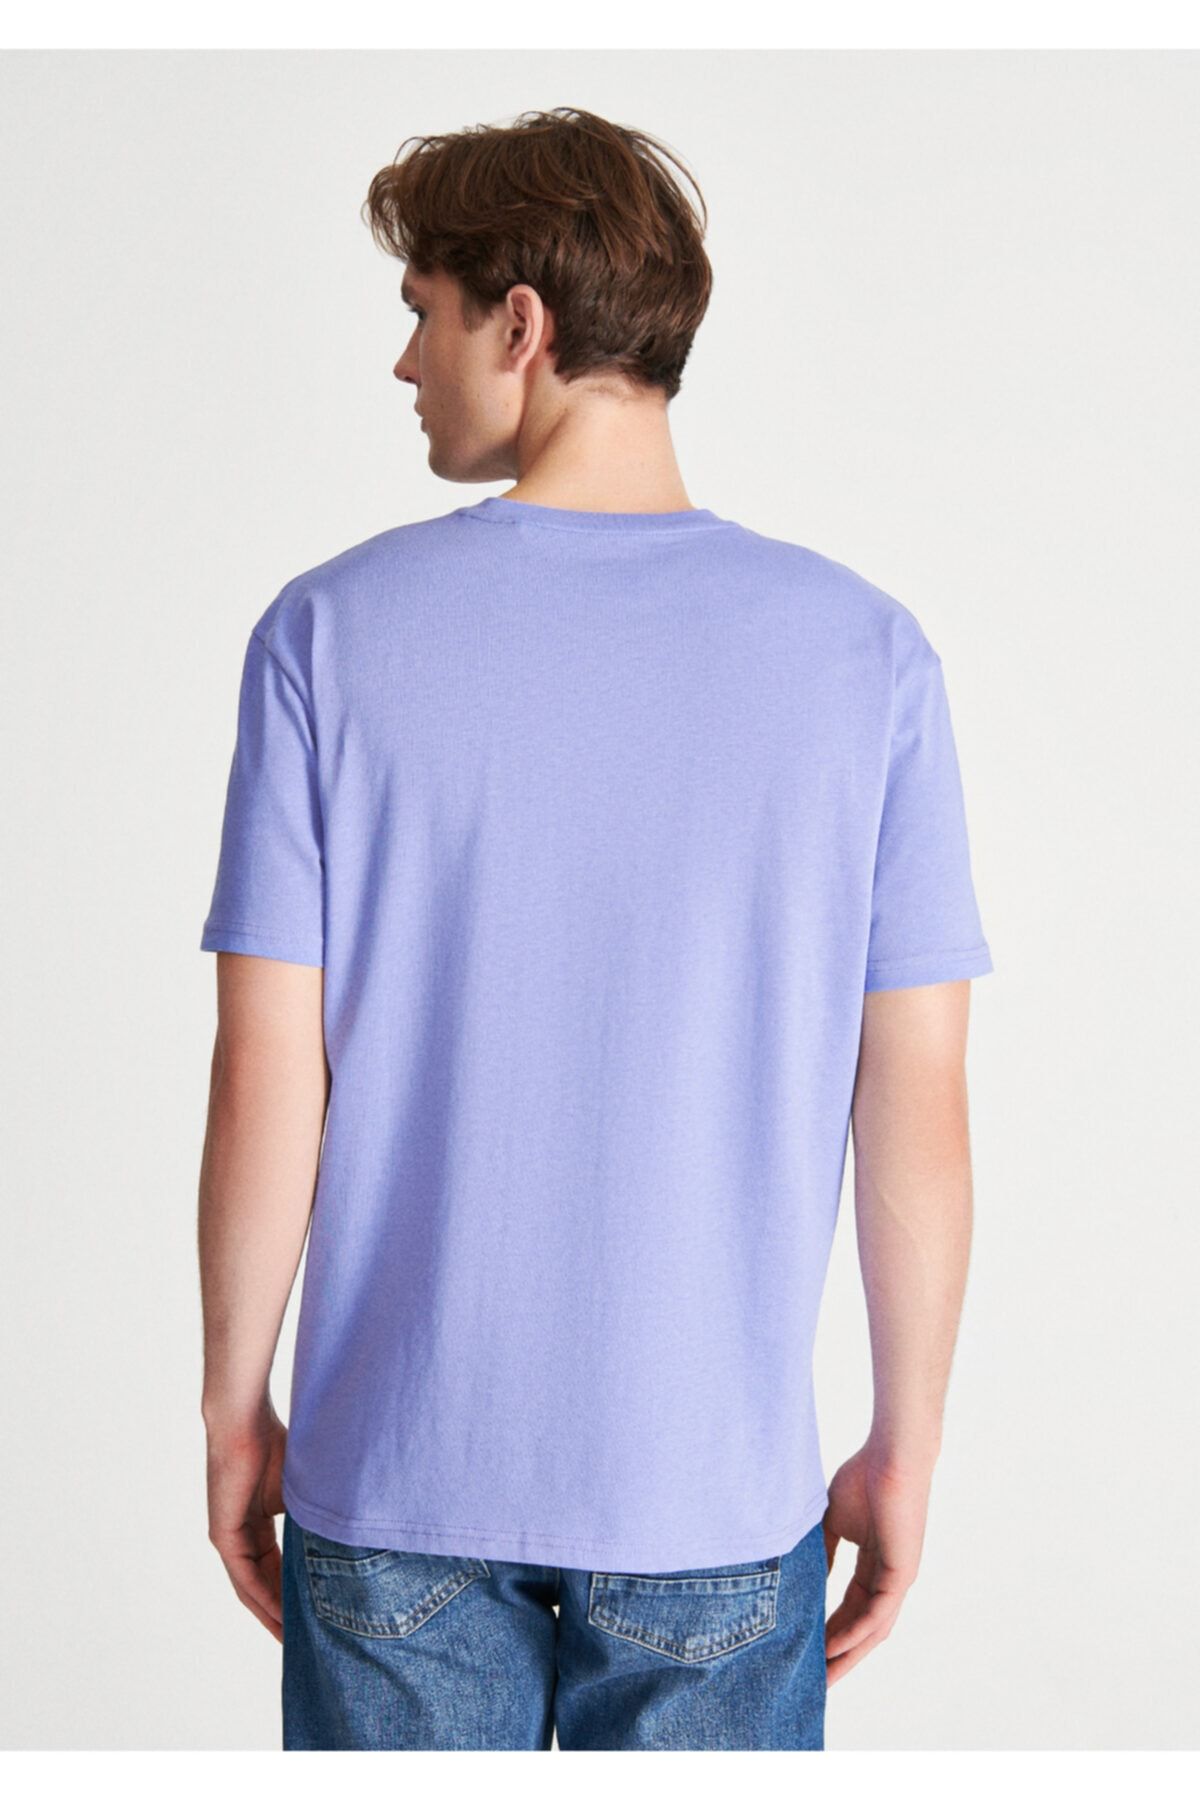 Mavi تی شرت لیلا چاپ شده استانبول تناسب / برش راحت 0610348-81079